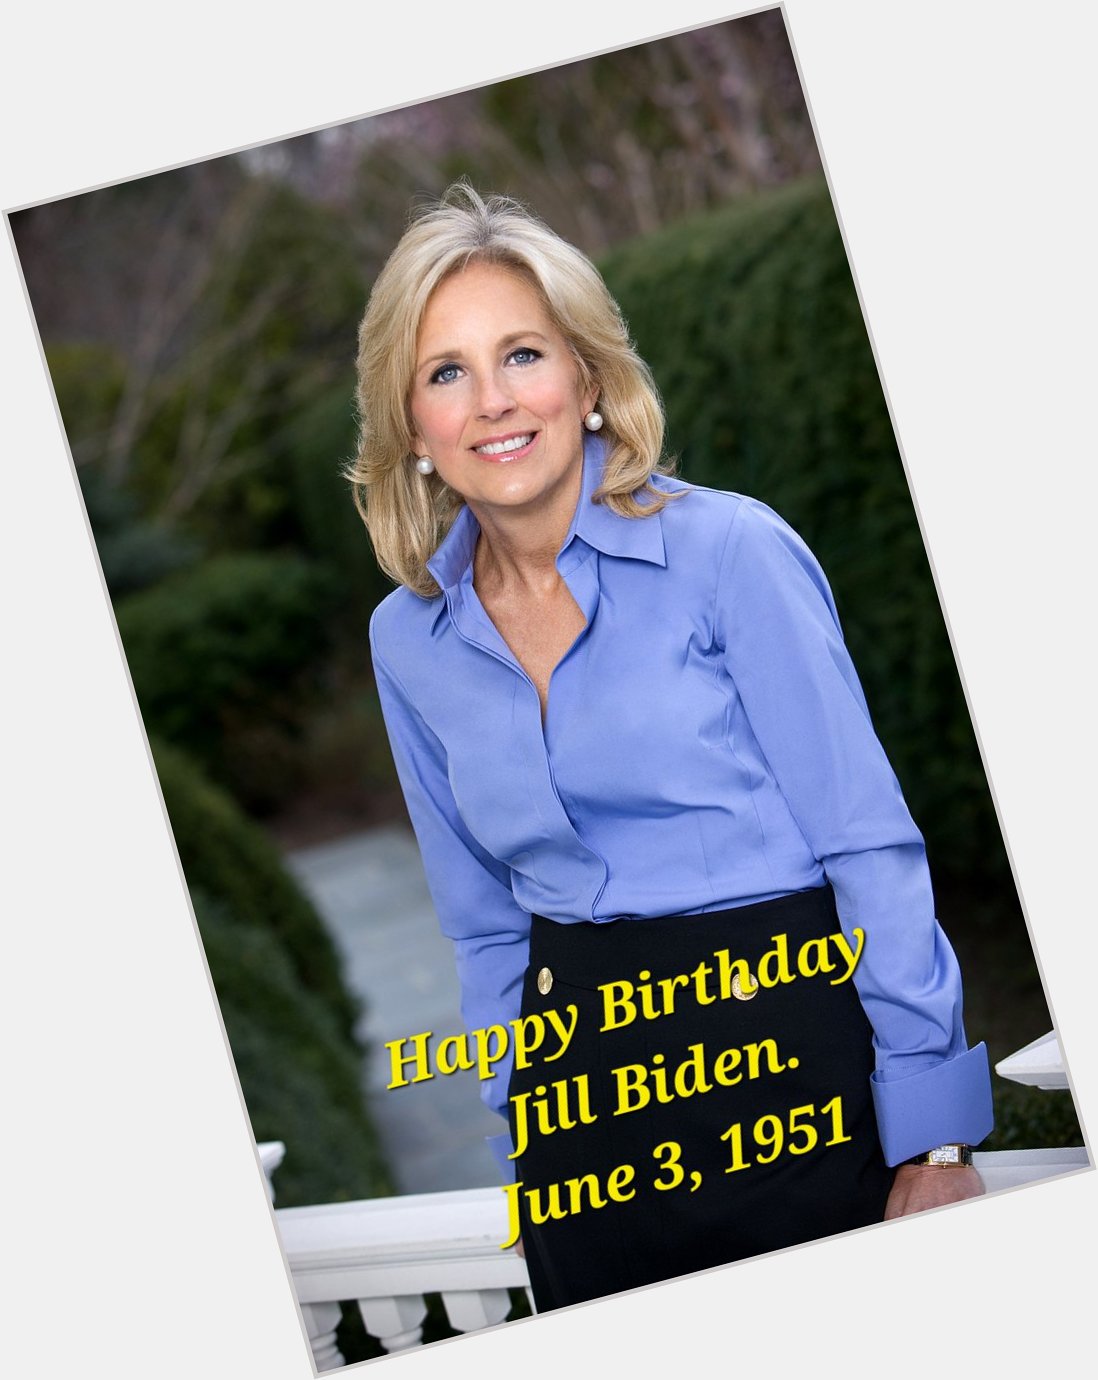 Happy Birthday Jill Biden who is 72 today. 